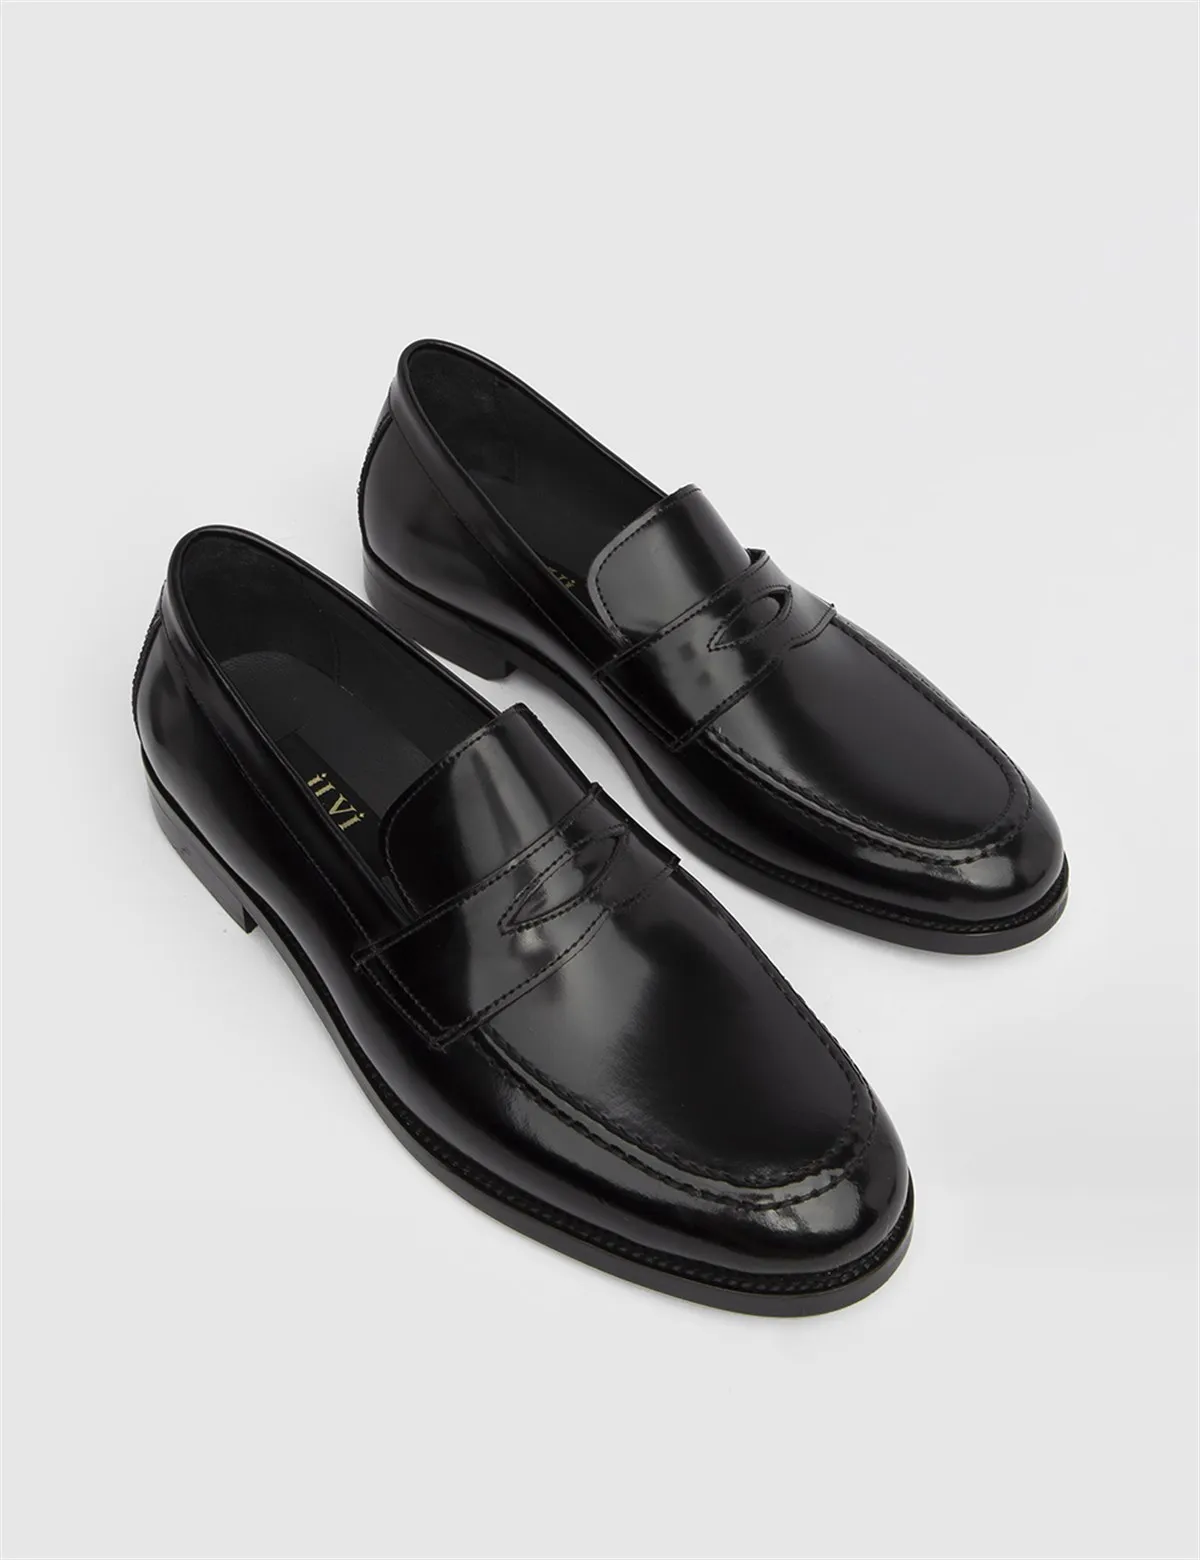 

ILVi-Genuine Leather Handmade Jussi Black Florentic Loafer Man's Shoes 2022 Fall/Winter